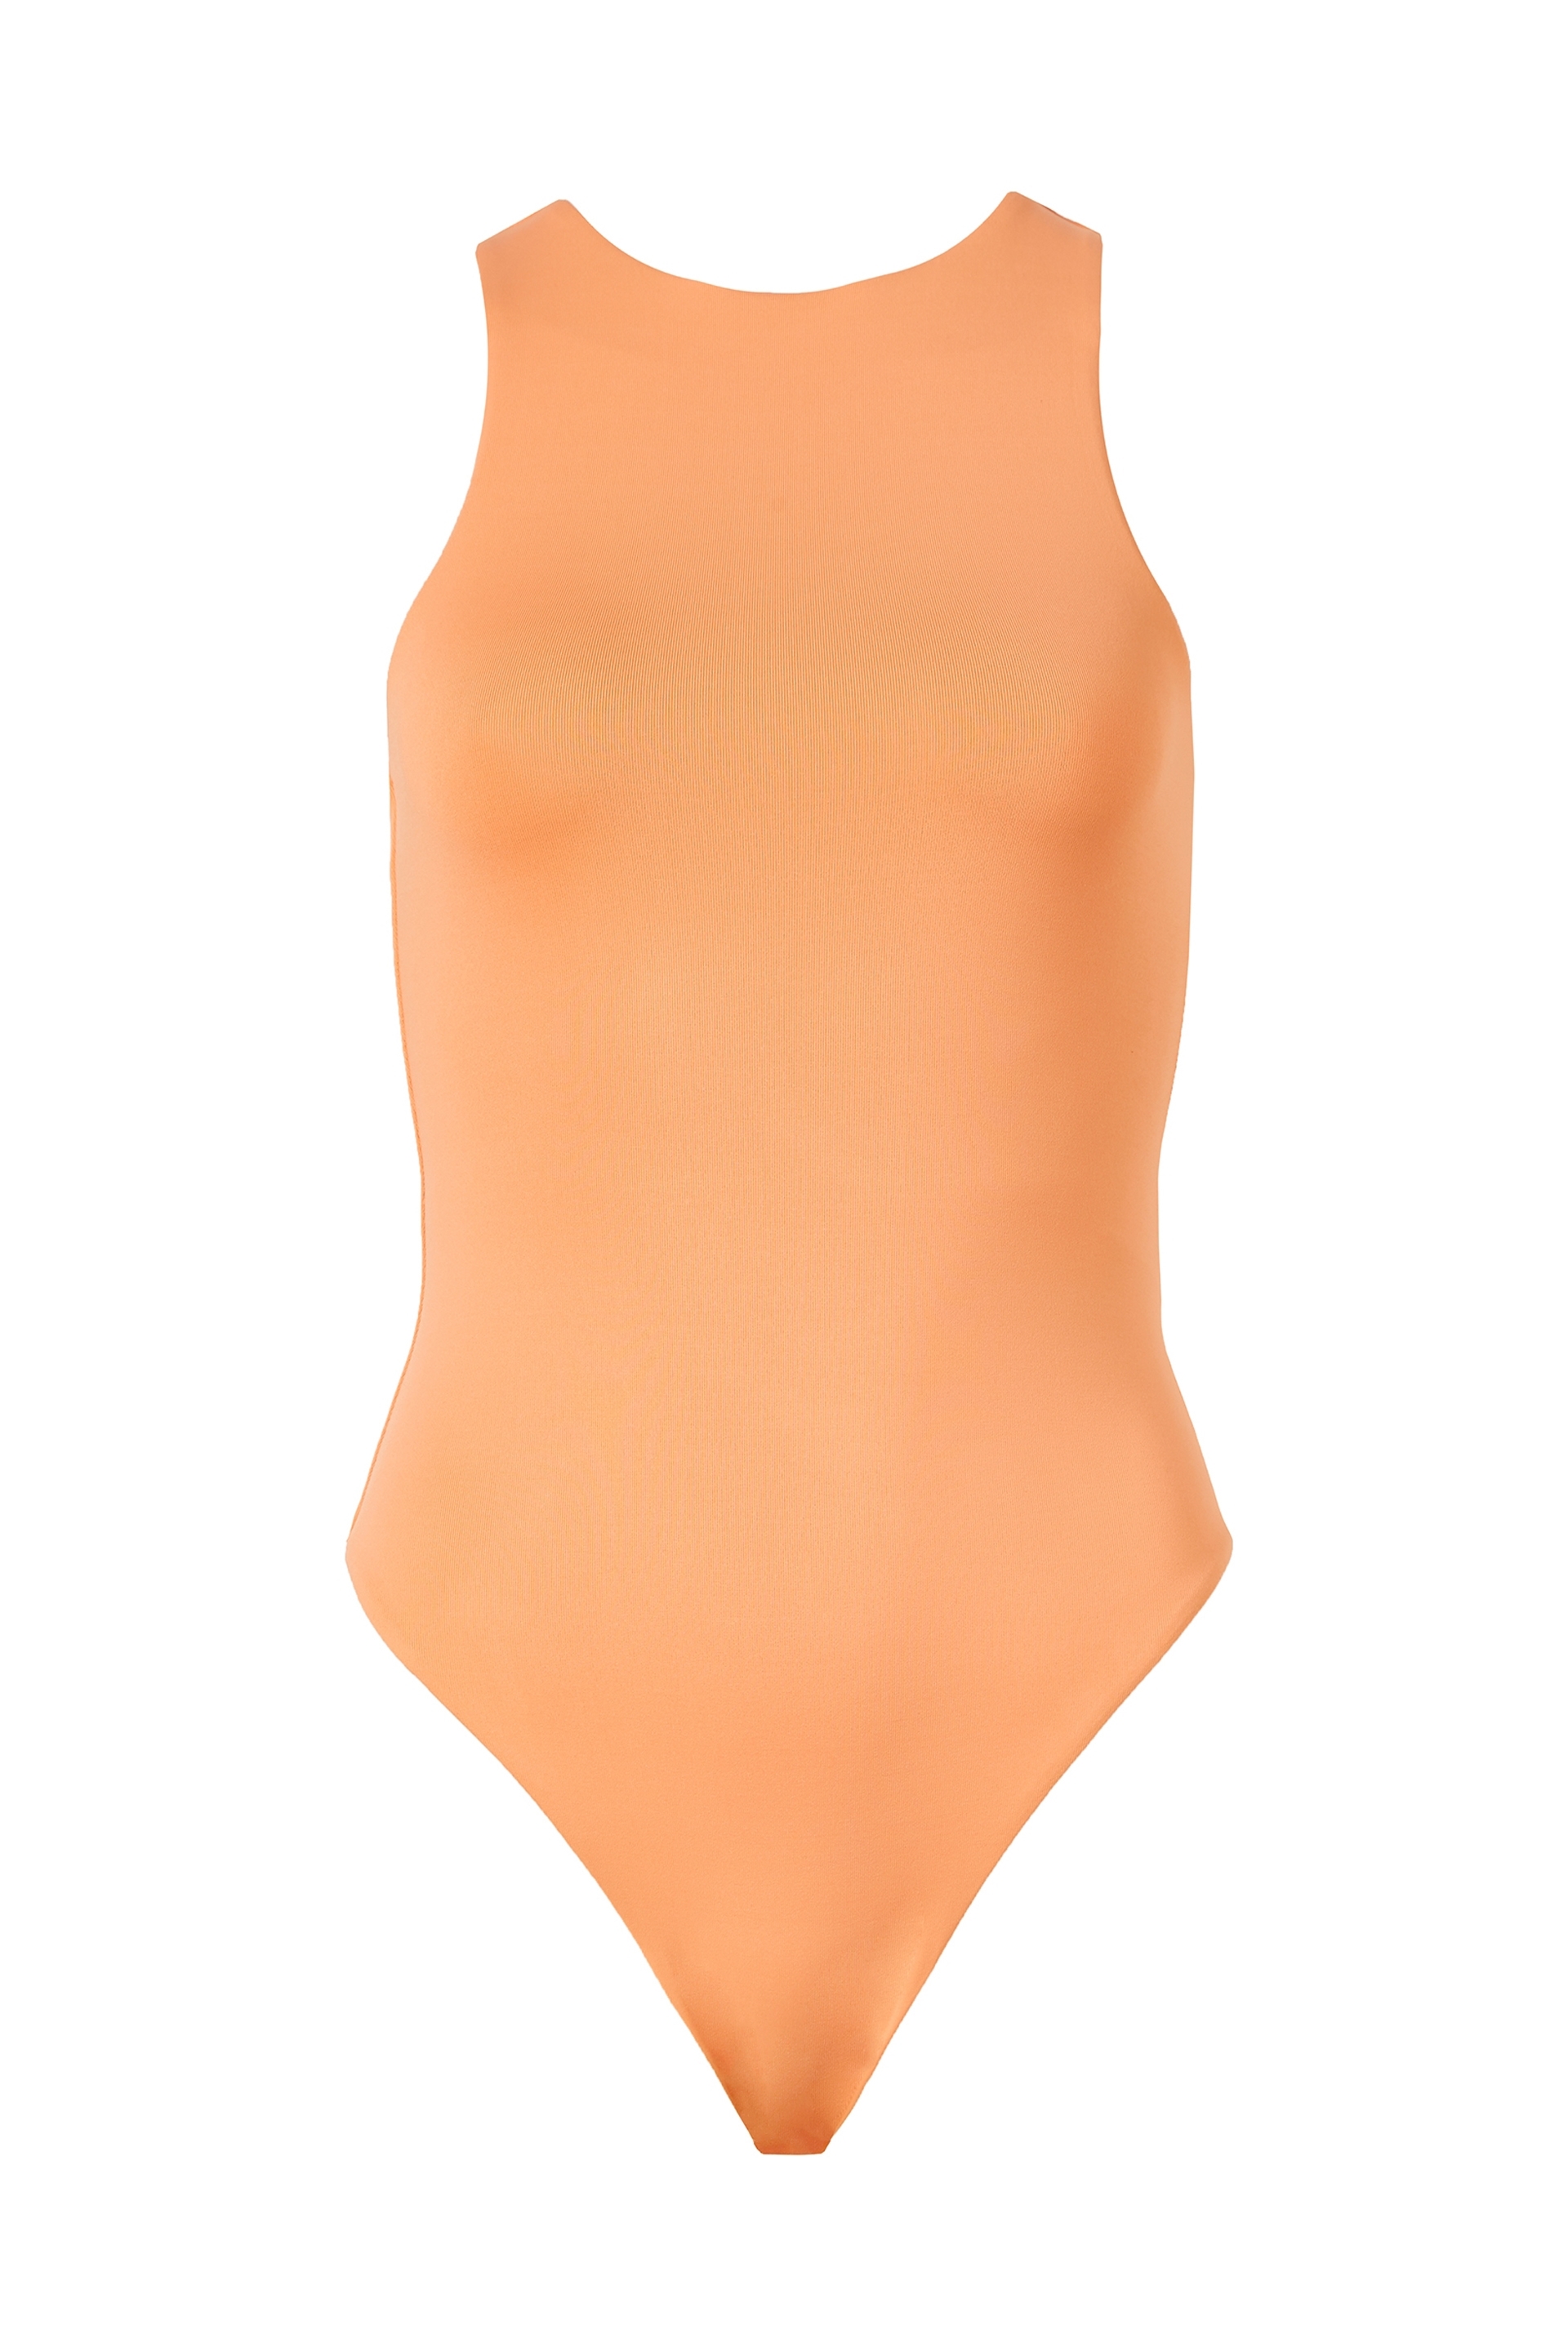 Supré - Luxe Sleeveless Bodysuit - Orange buff